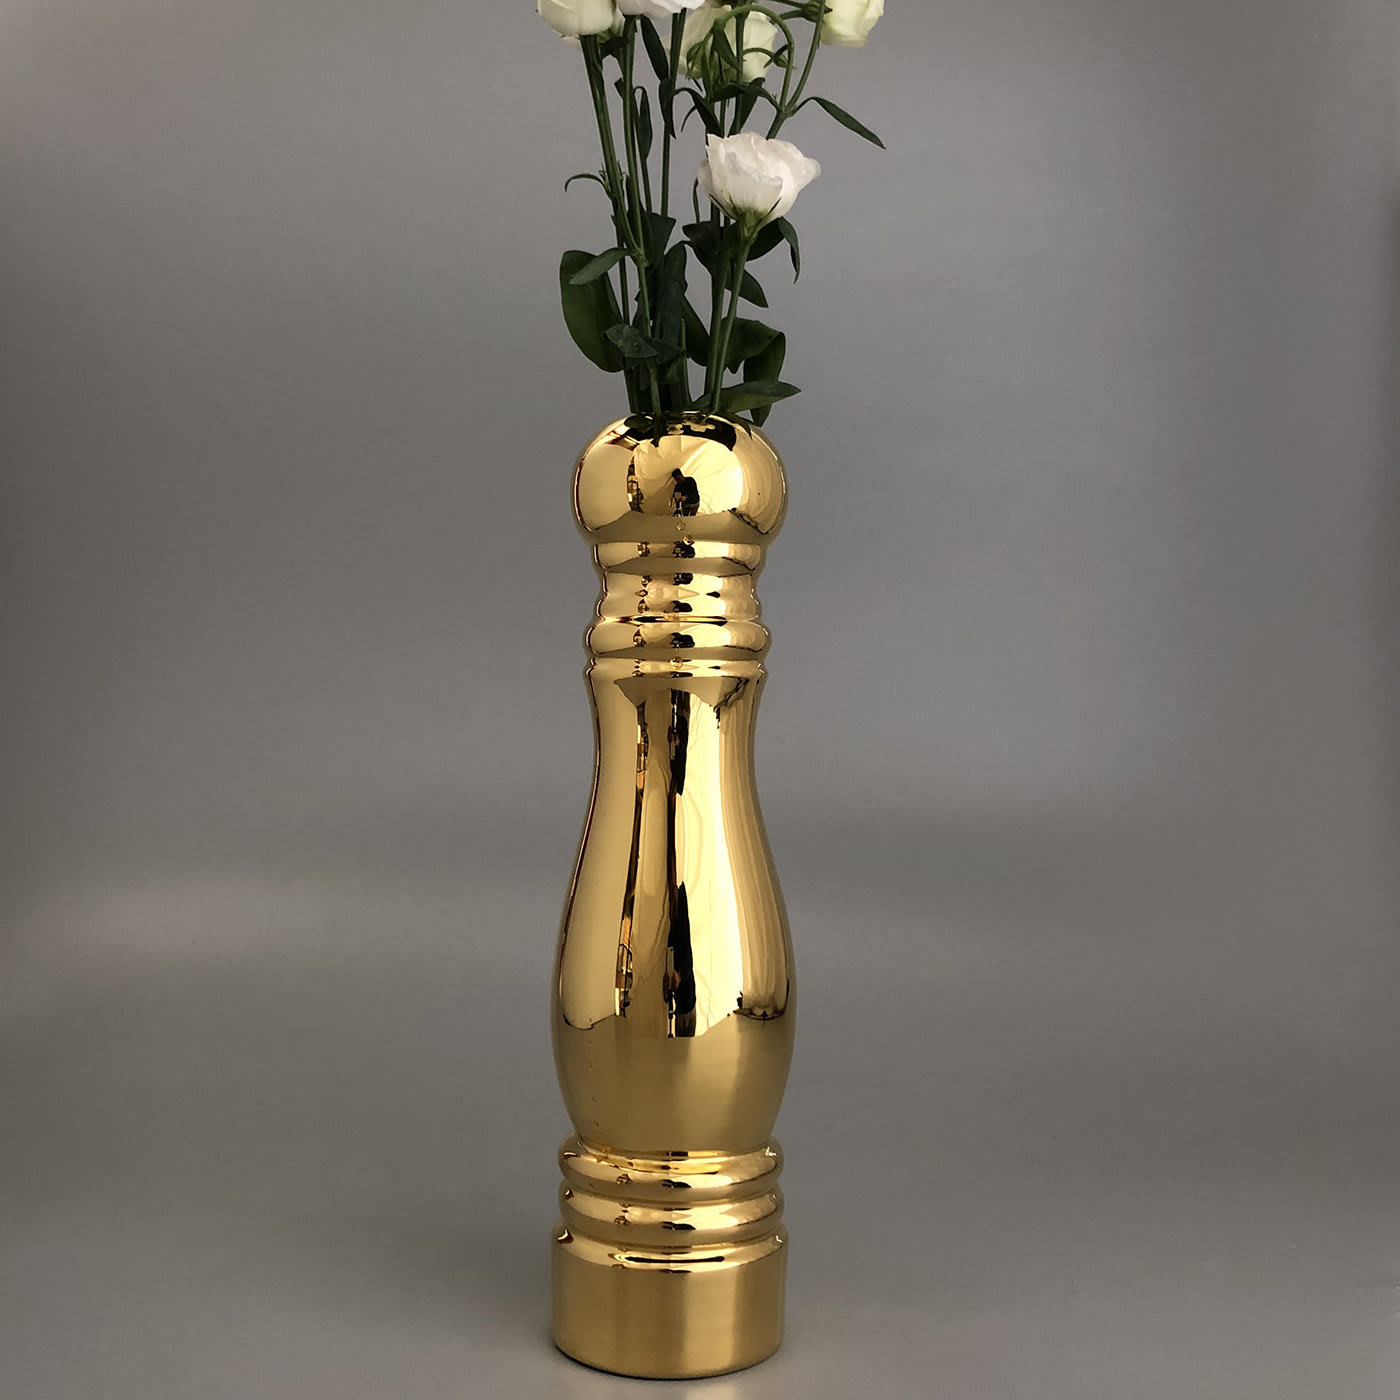 Macinapepe Brass Terracotta Flower Vase - Tuttoattaccato